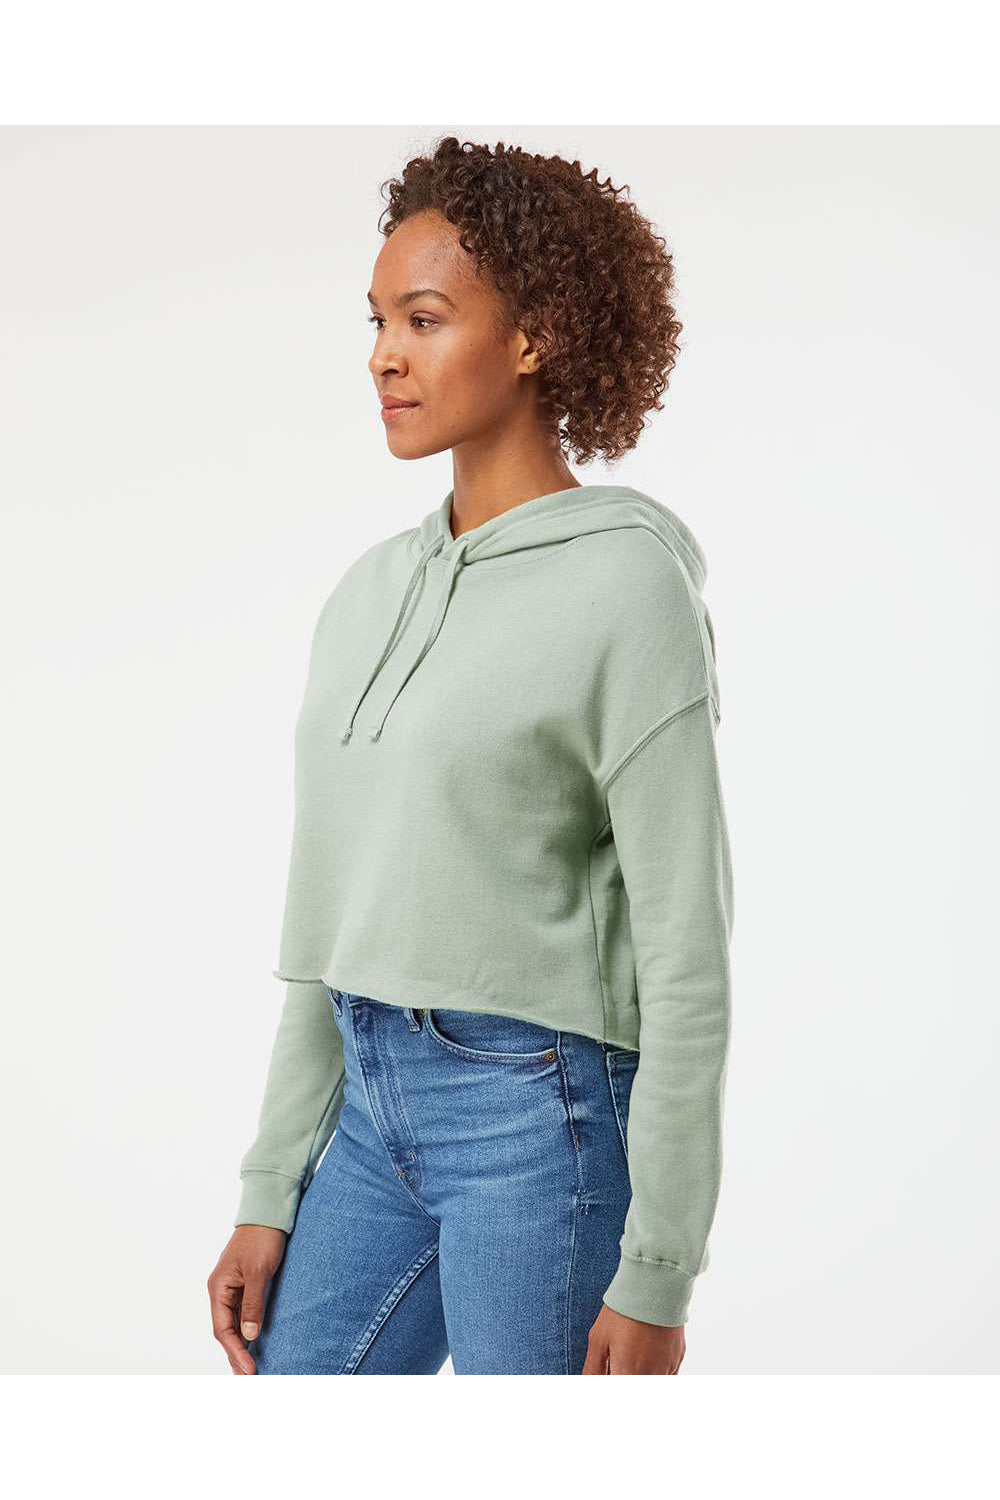 Independent Trading Co. AFX64CRP Womens Crop Hooded Sweatshirt Hoodie Sage Green Model Side